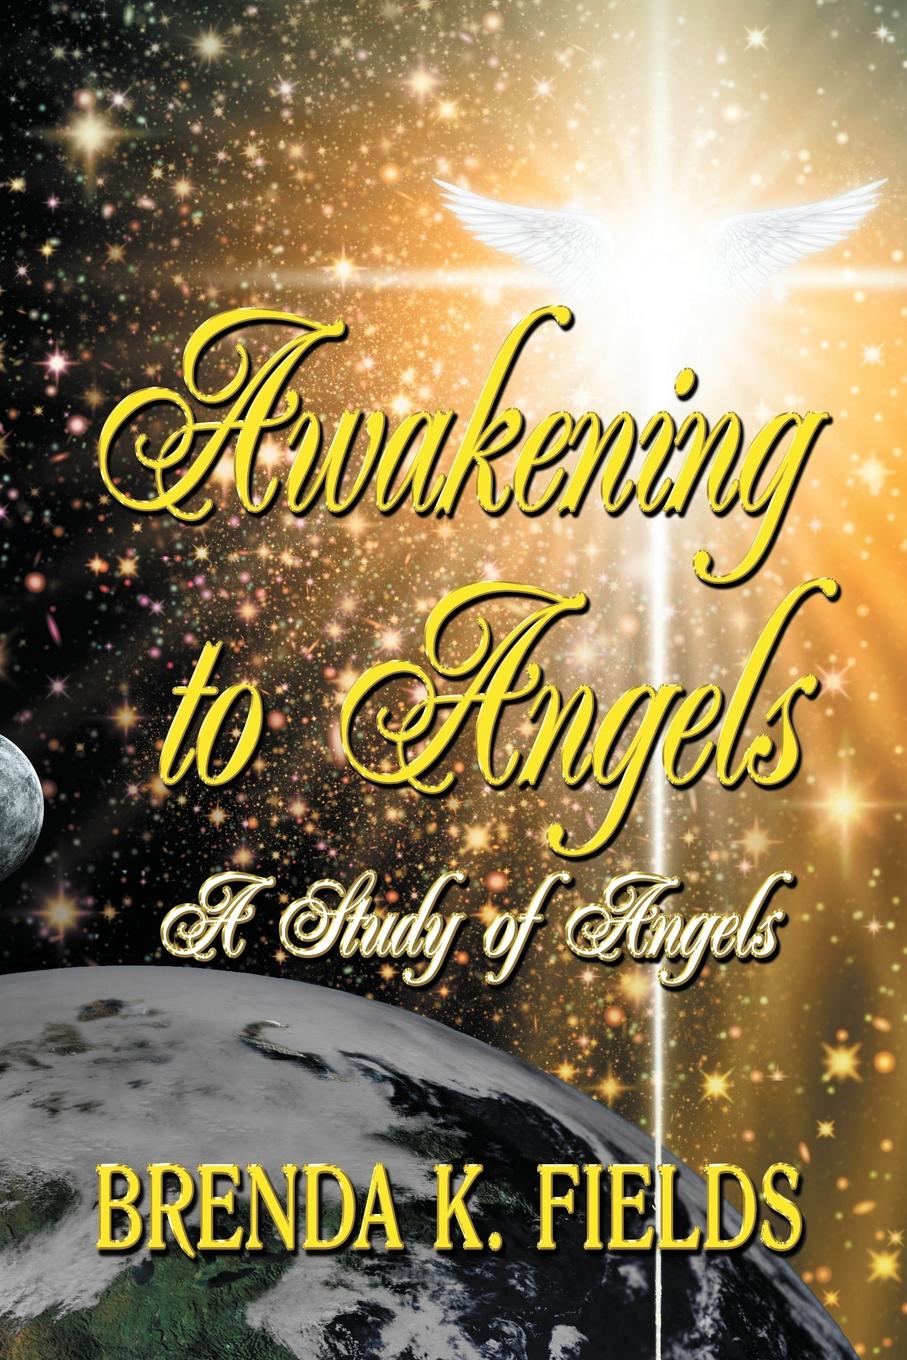 Brenda K. Fields Awakening to Angels. A Study of Angels